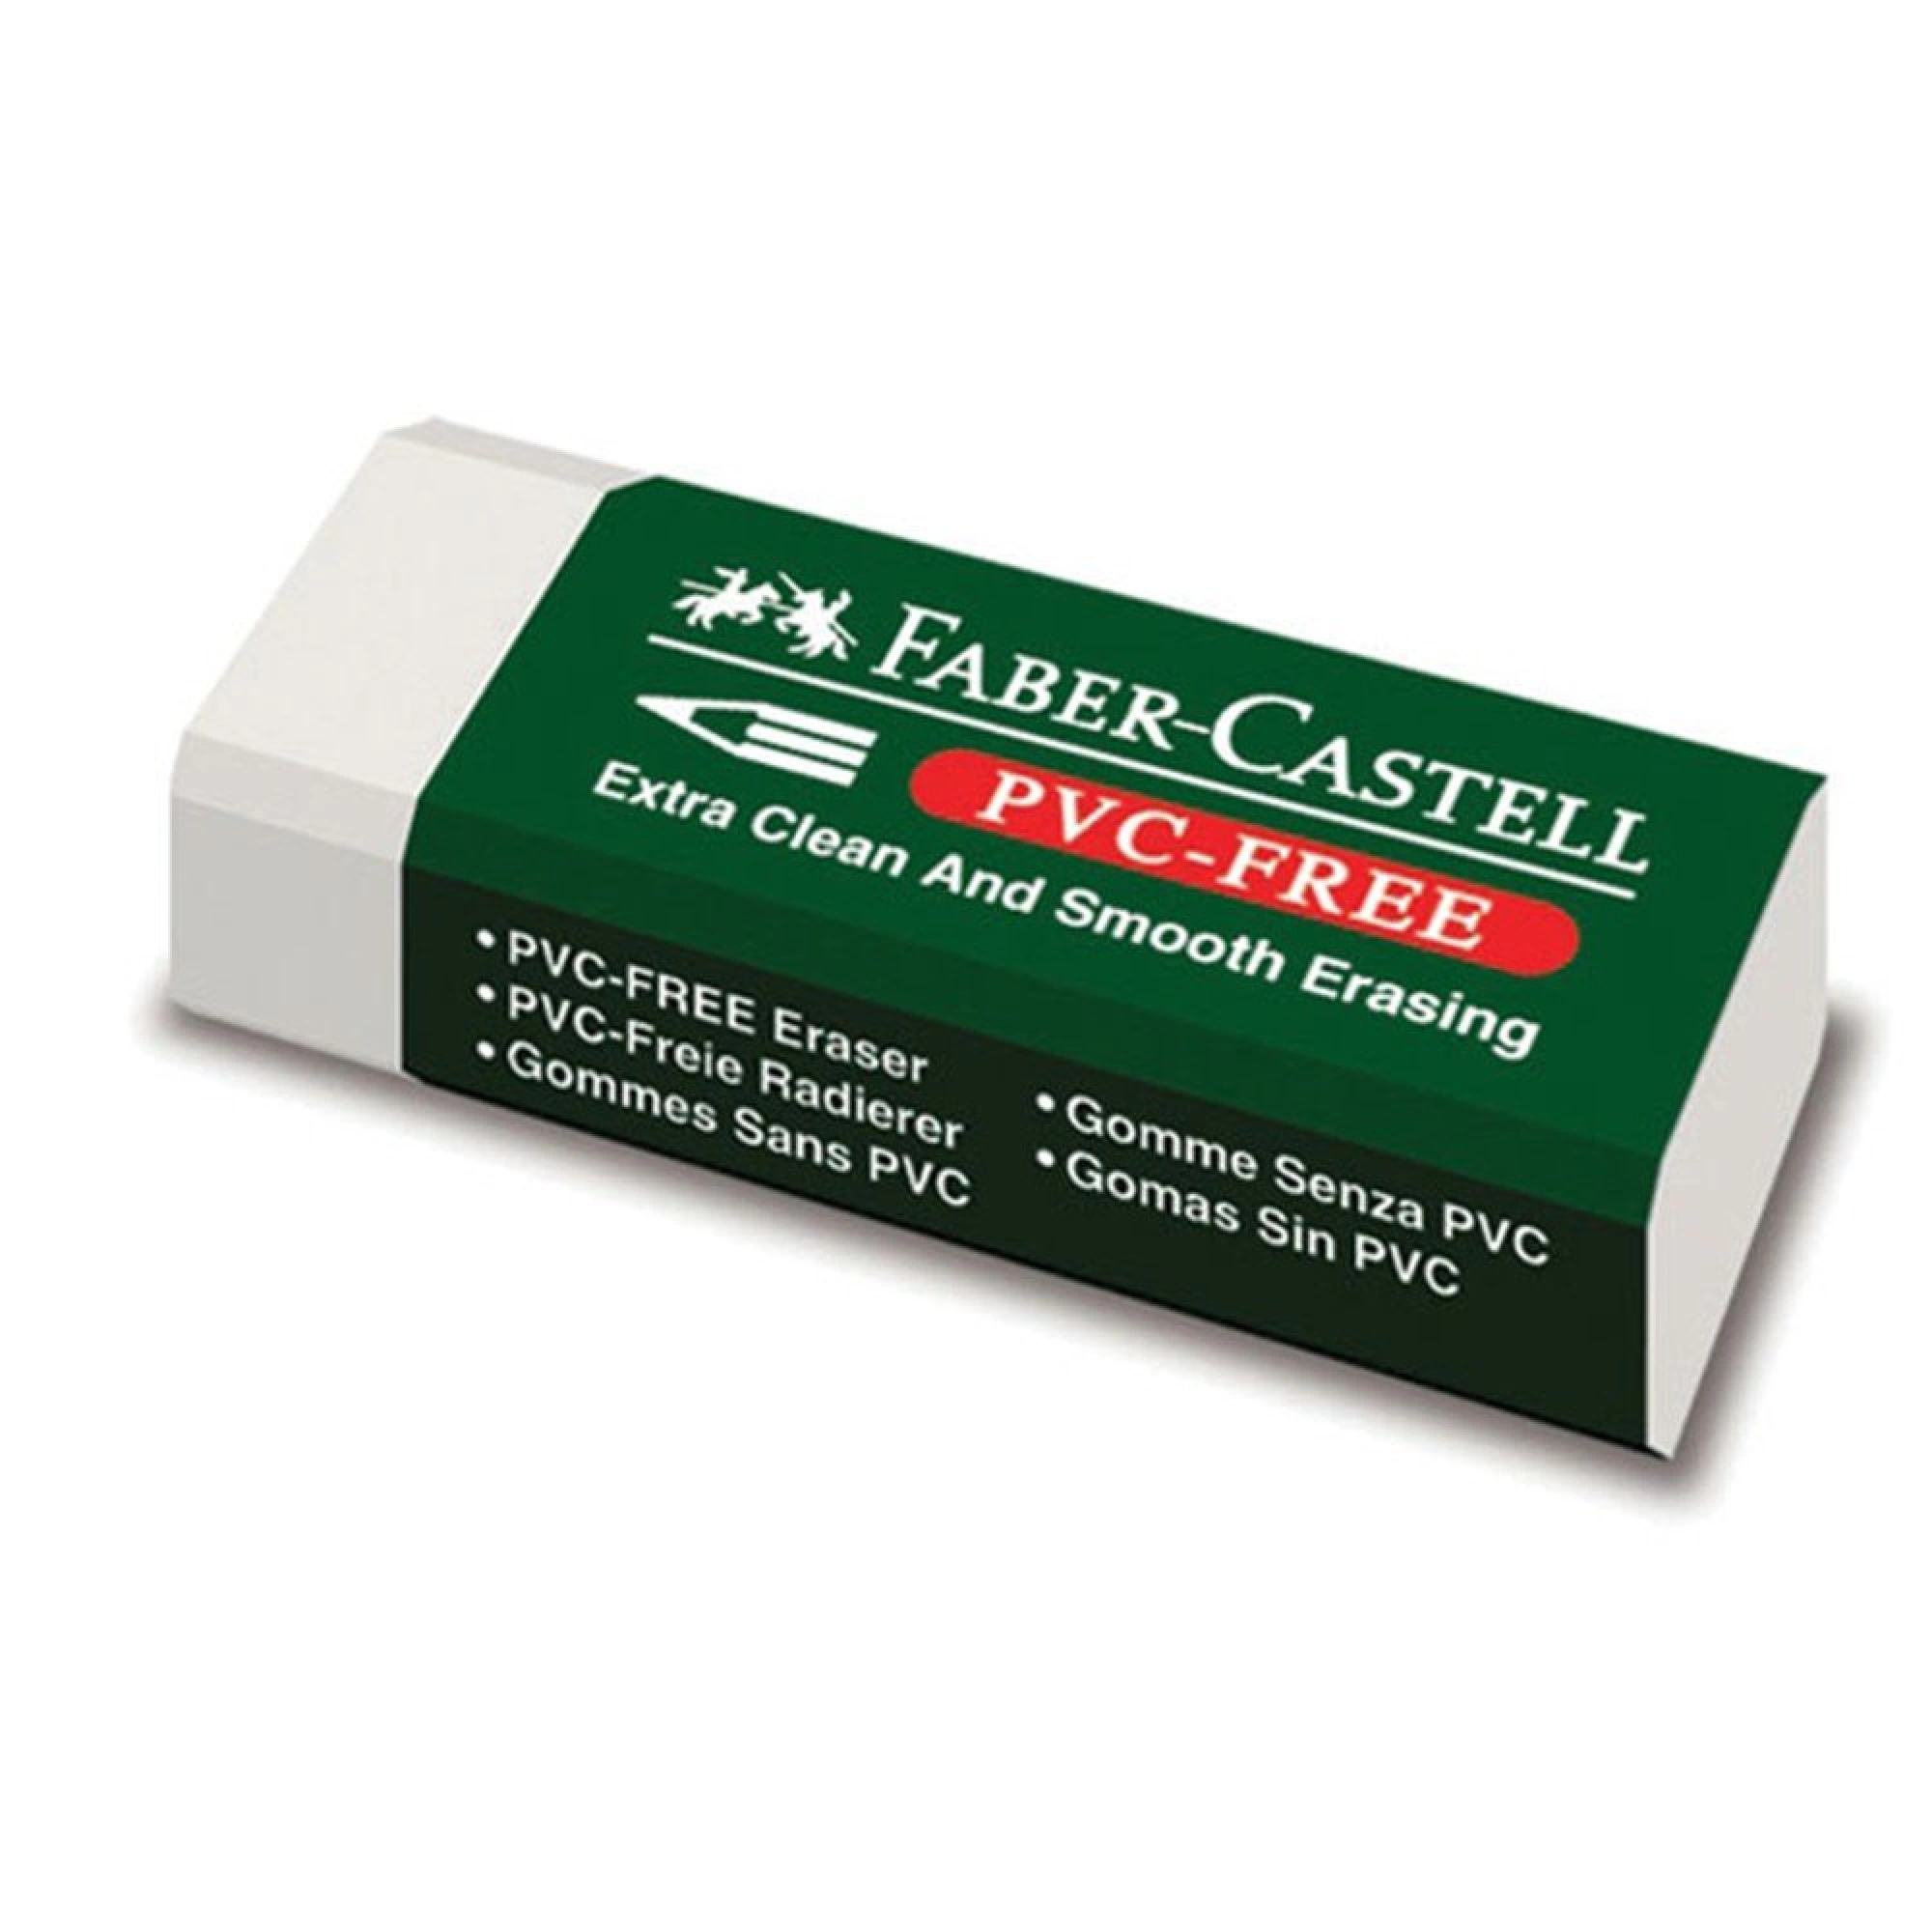 Faber Castell KRS 708520 Silgi Beyaz F-C188520